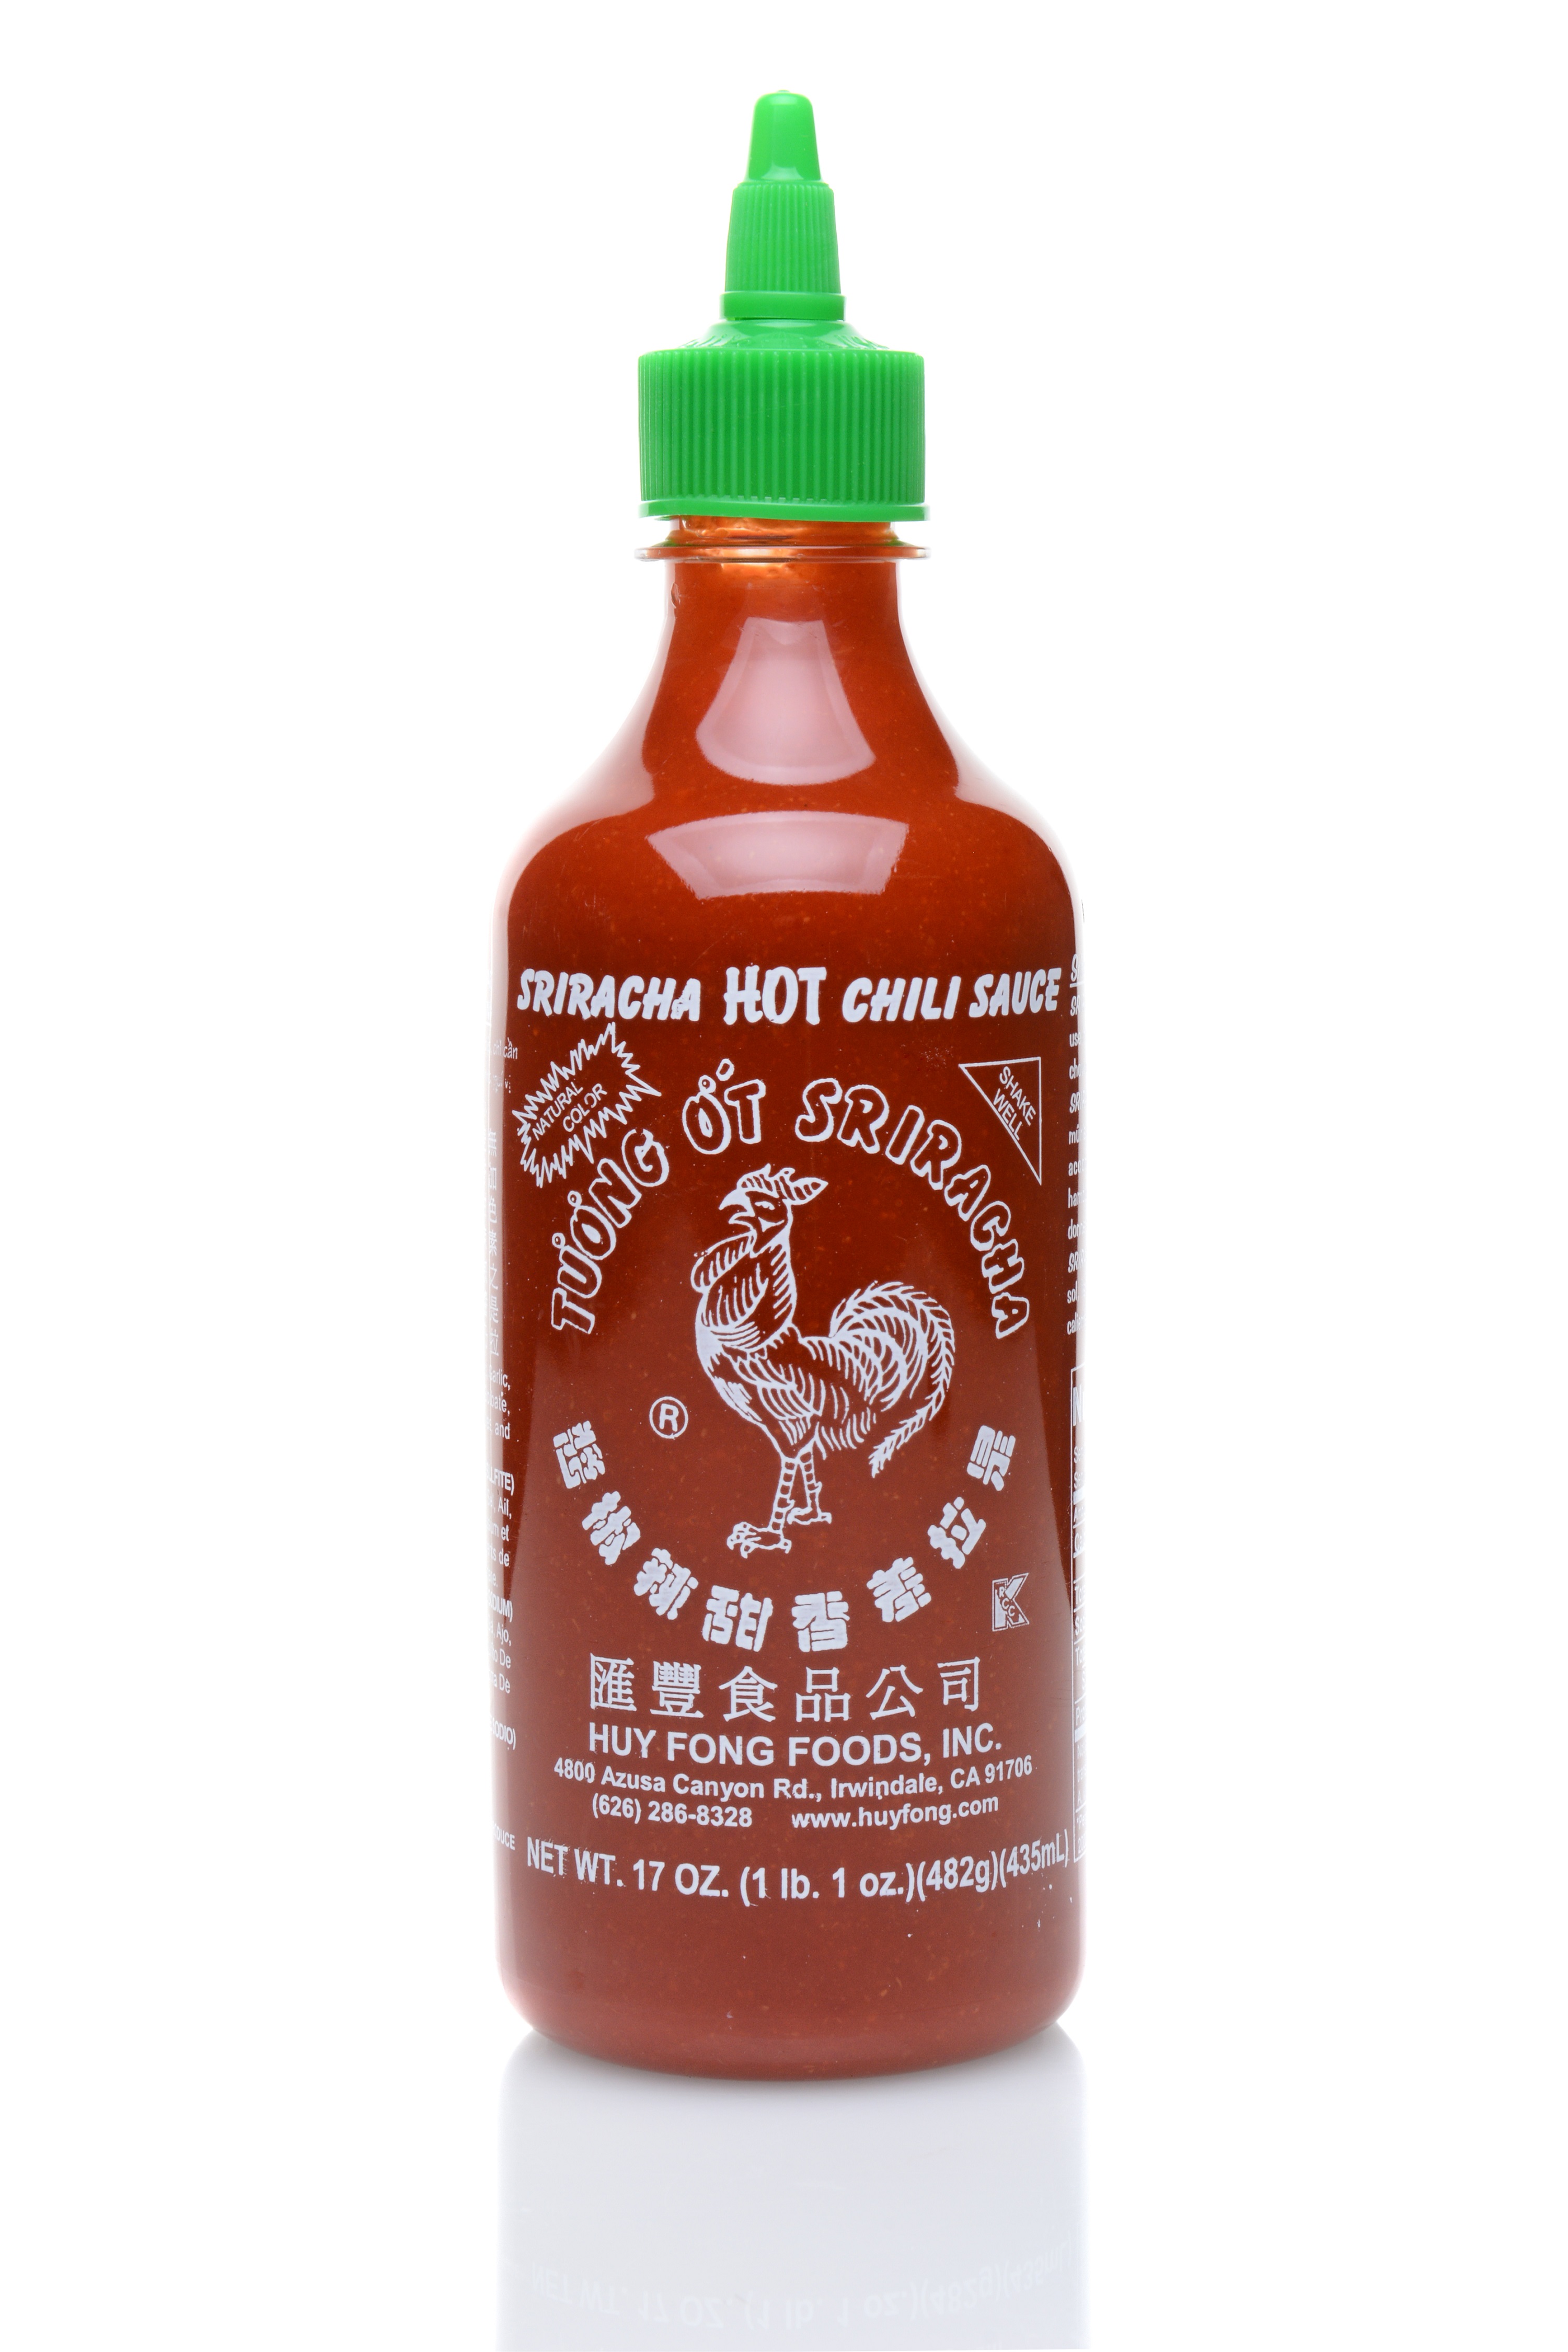 Irvine,,California,-,July,14,,2014:,A,Bottle,Sriracha,Hot